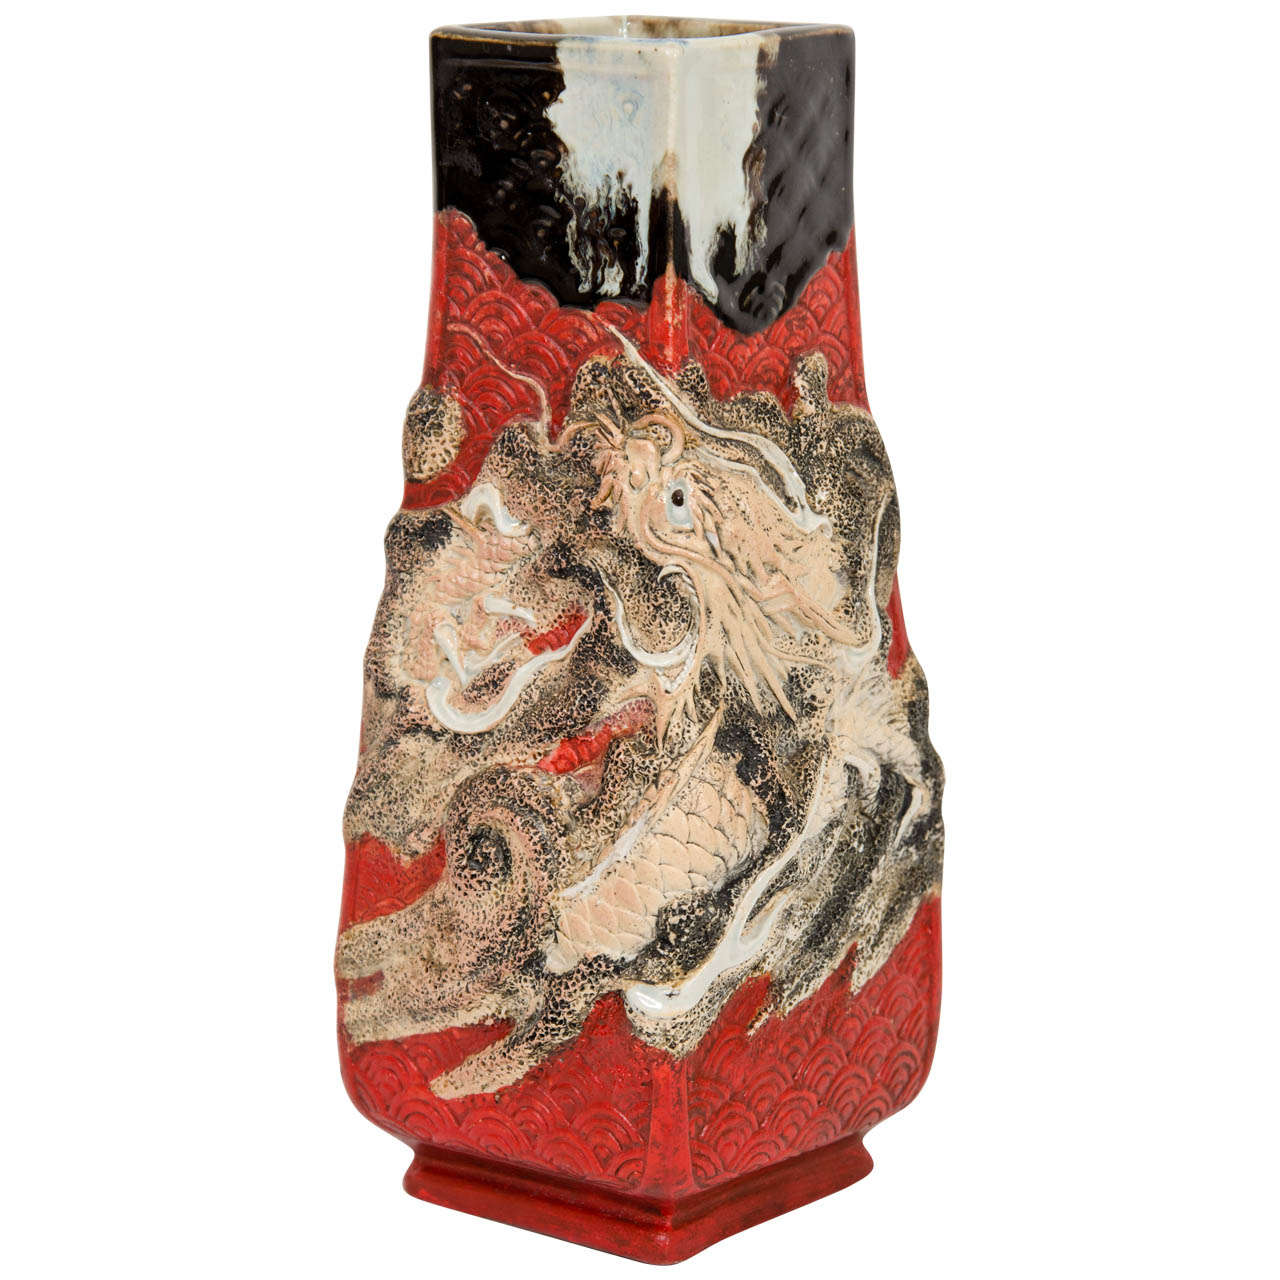 A Vintage Ceramic Japanese Vase with Raised Dragon